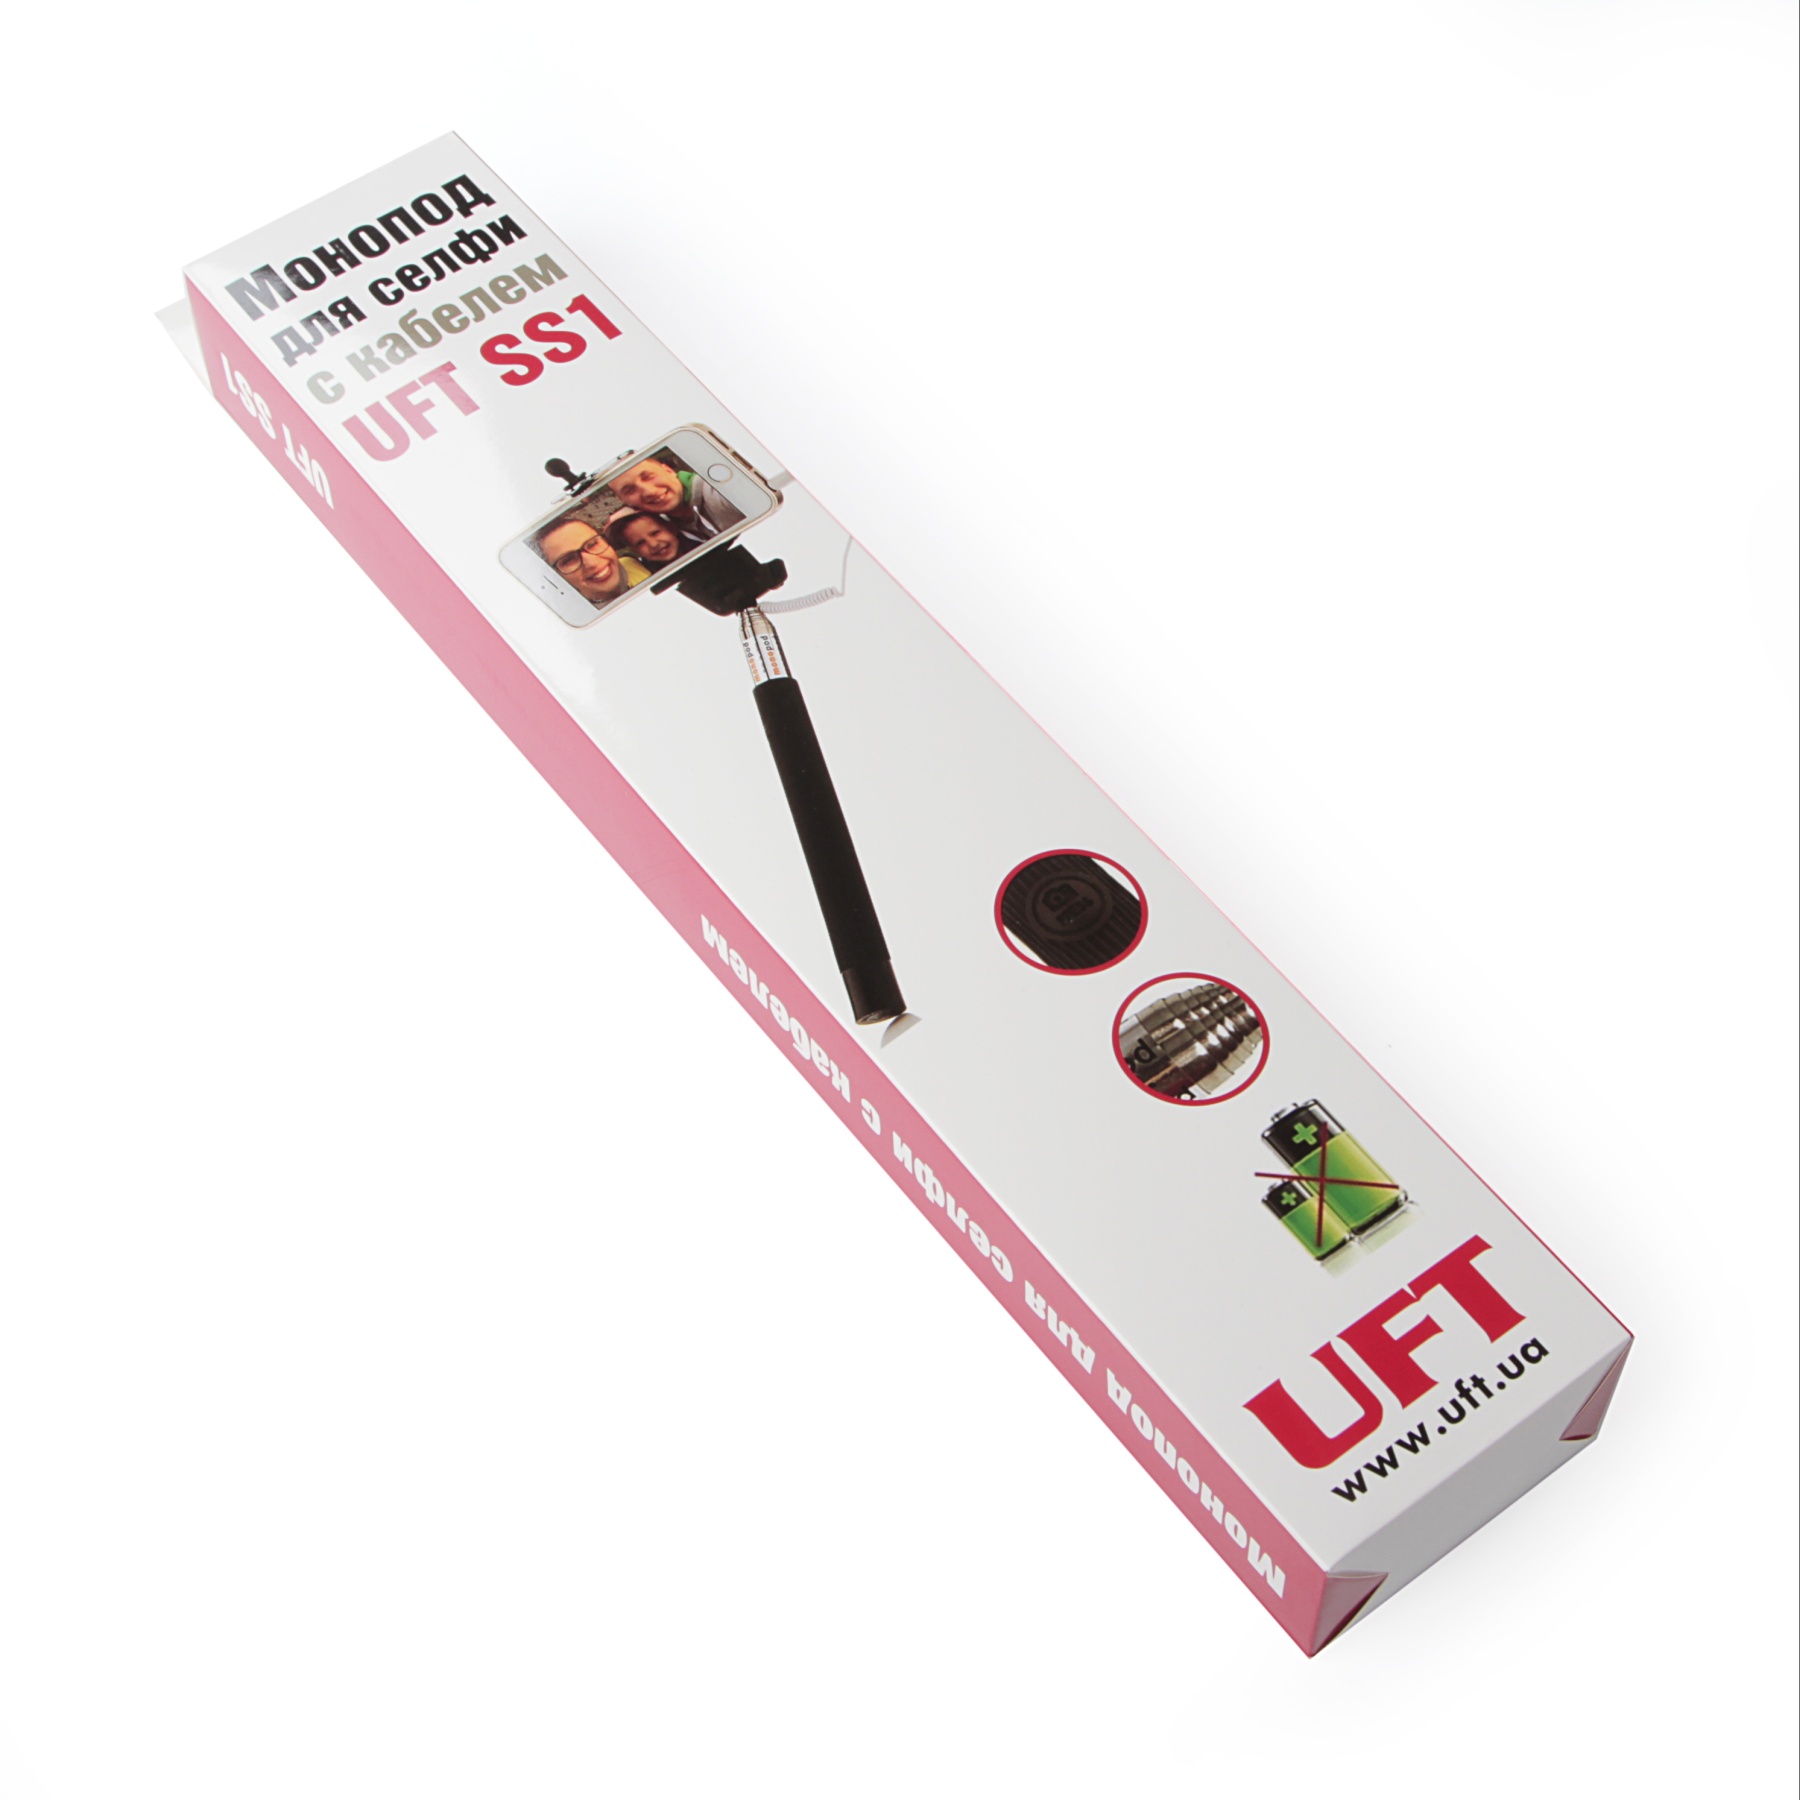 Фото 1 Монопод для селфи, селфи стик со шнуром UFT SS1 Pink